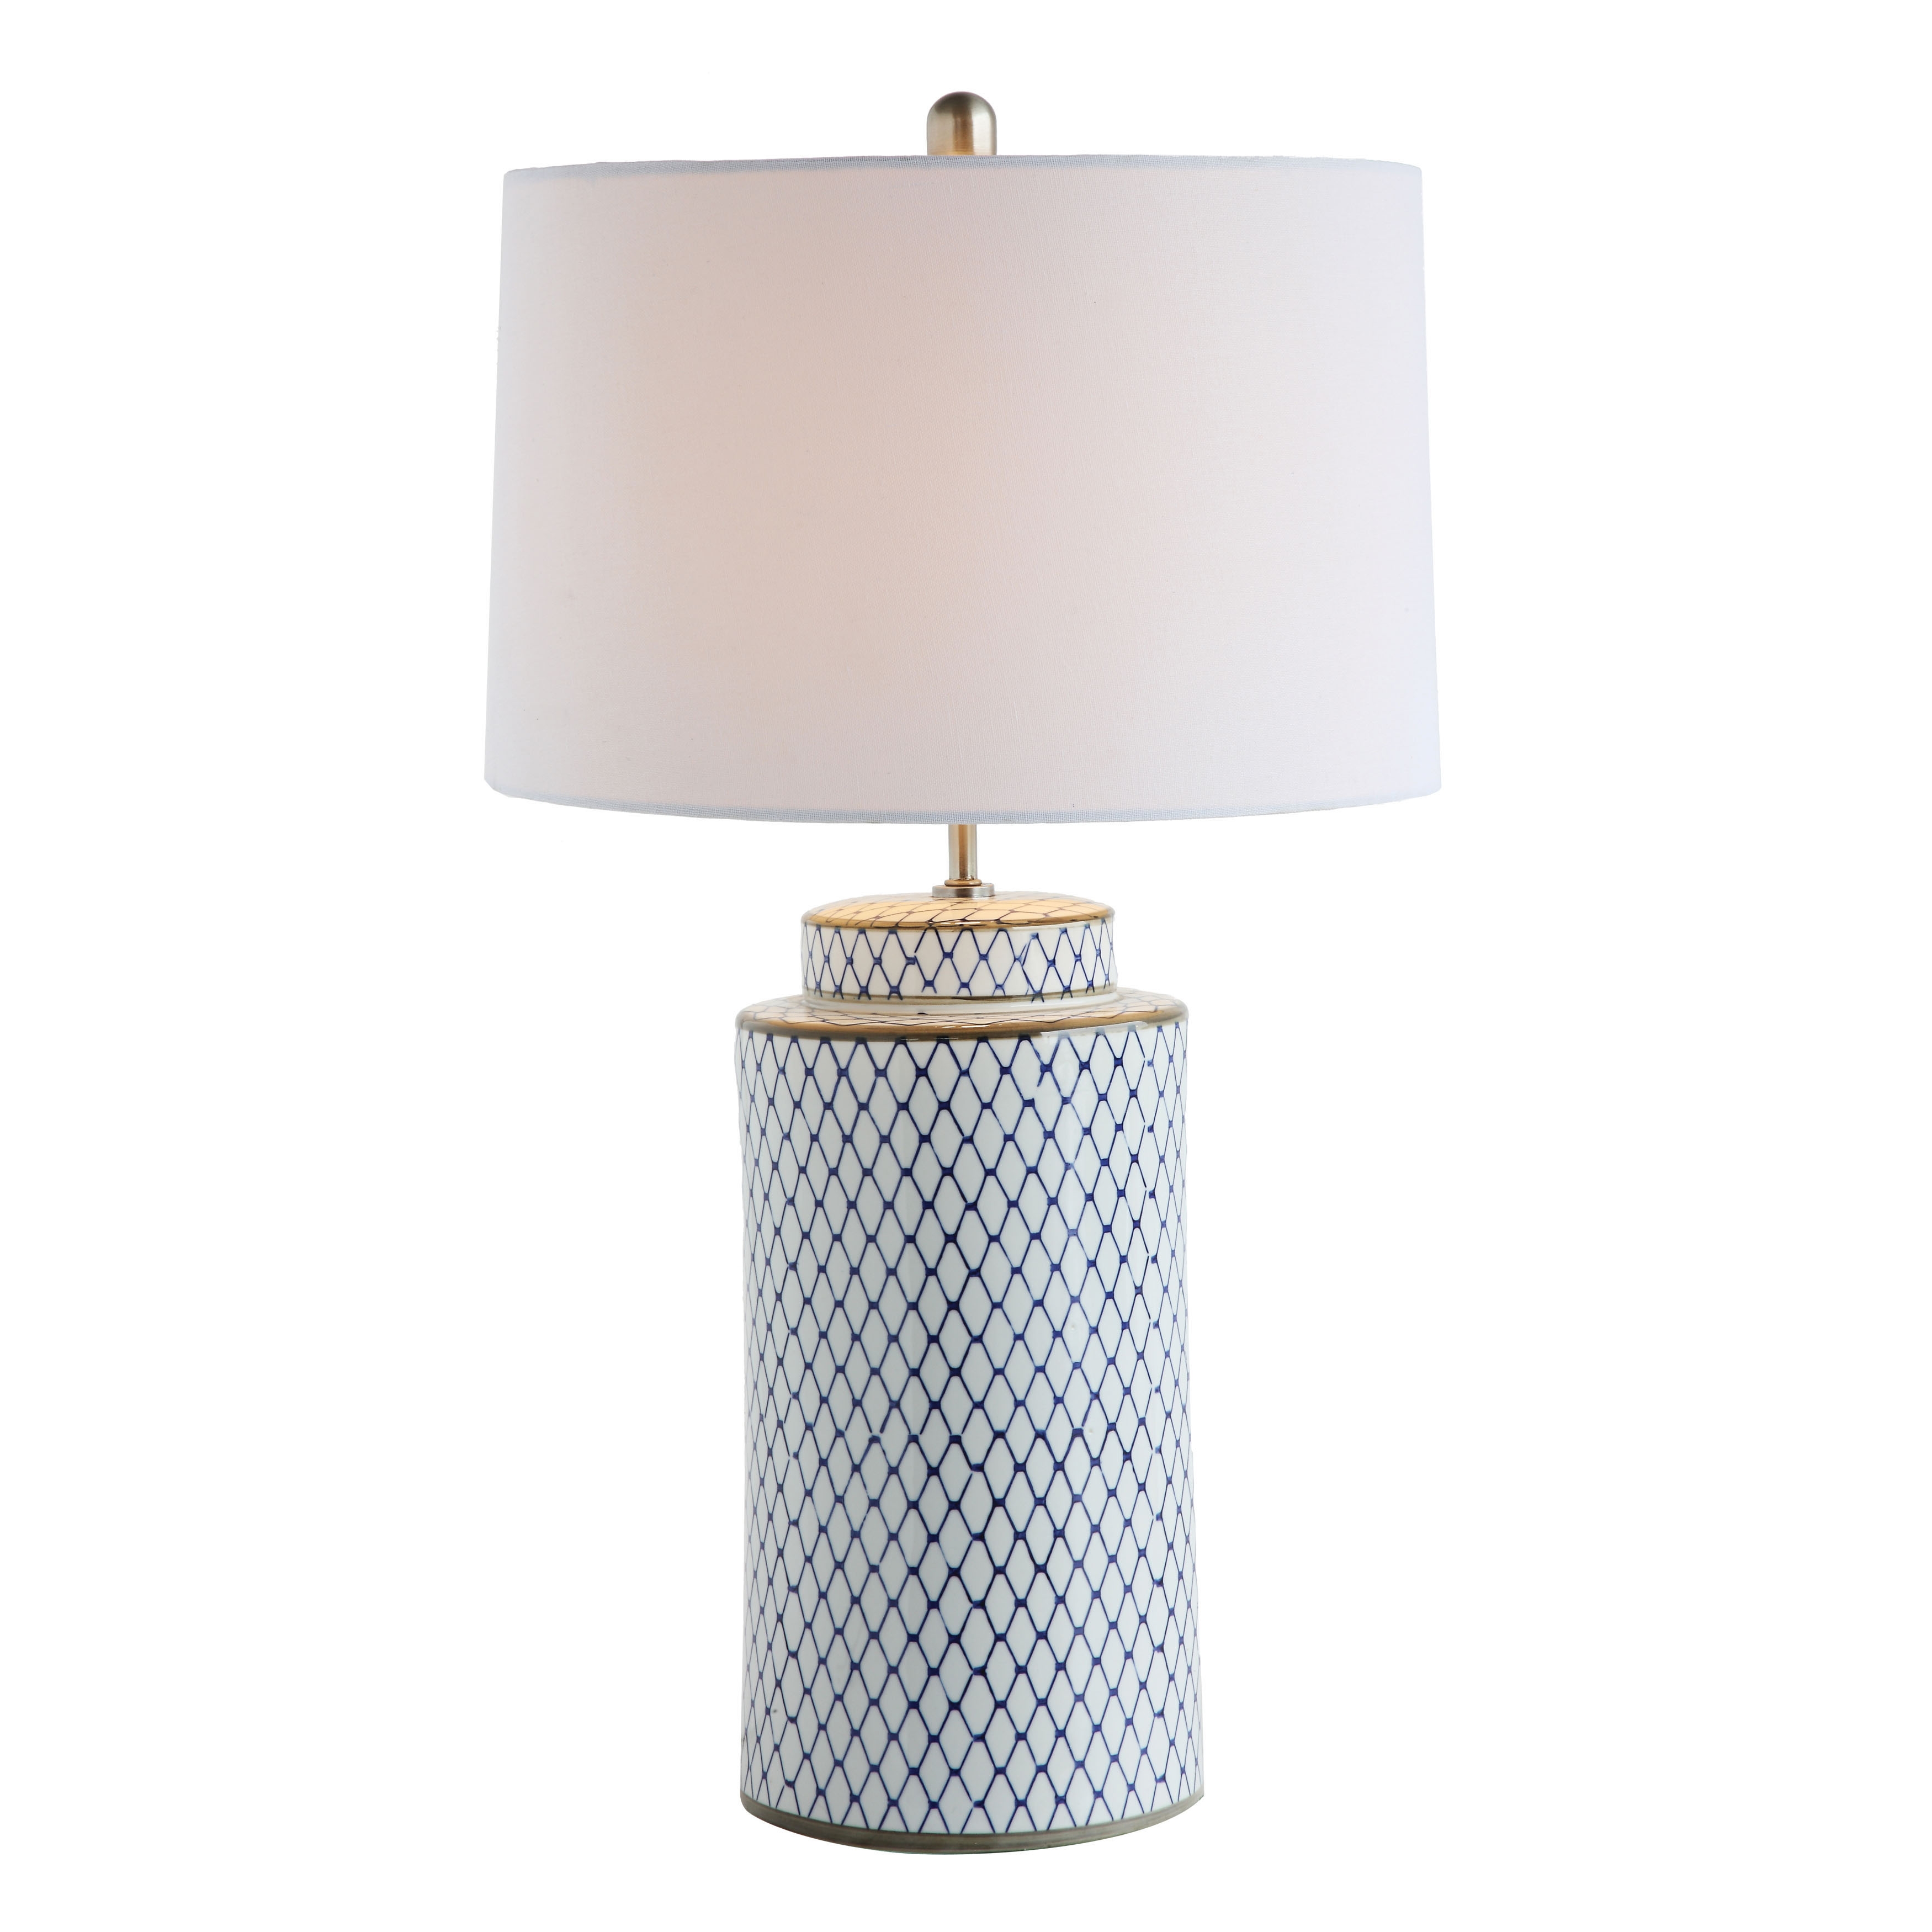 Ceramic Table lamp with Linen Shade, Indigo & White - Image 0